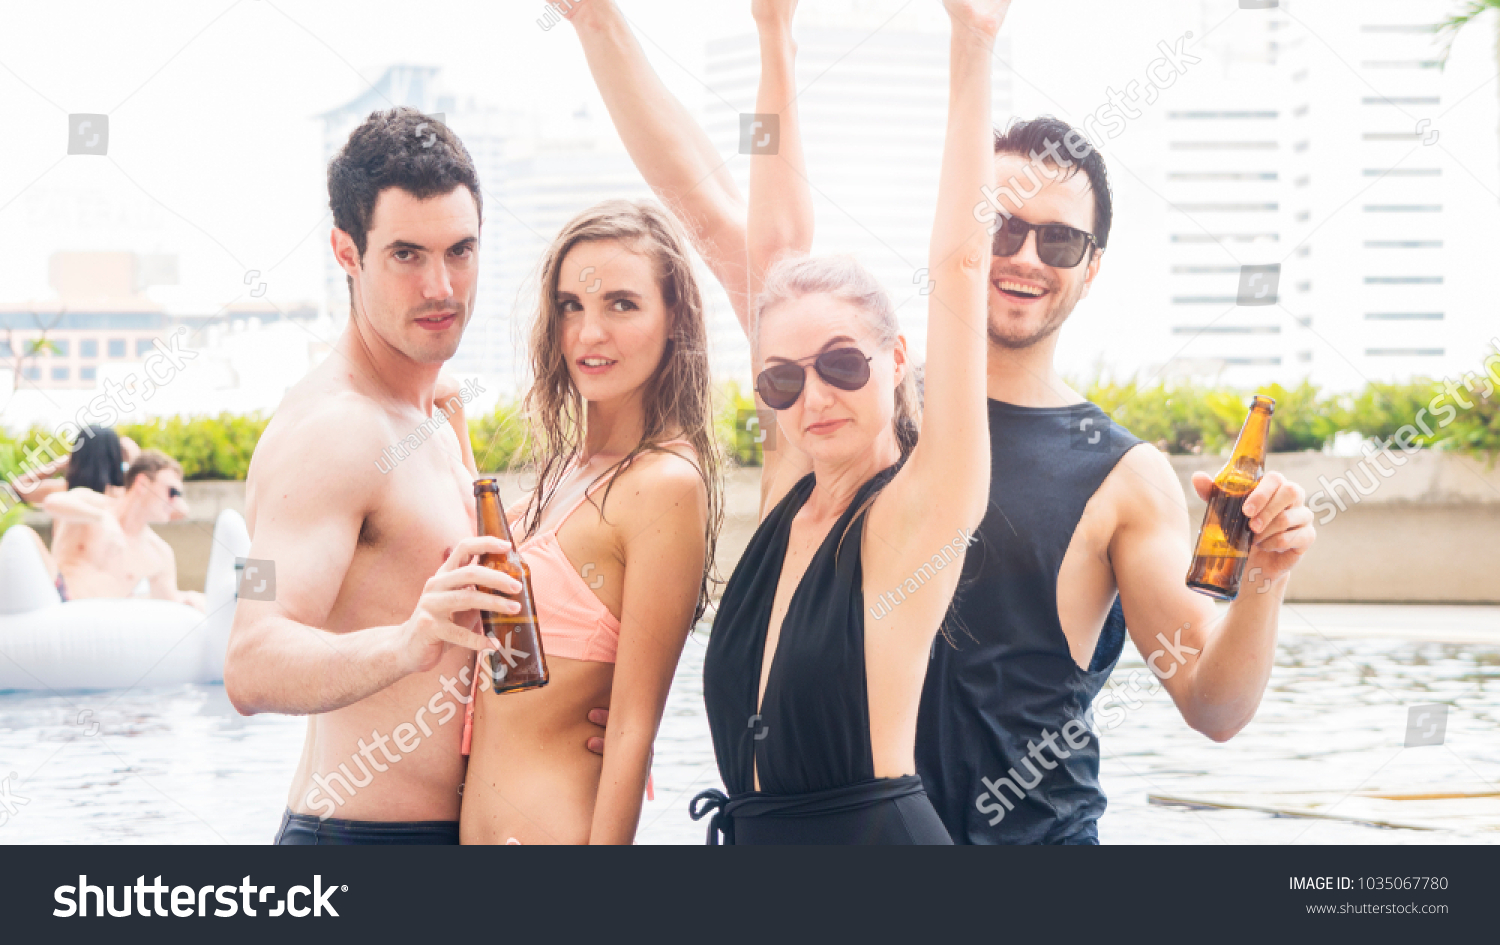 Nude Pool Party carey porn